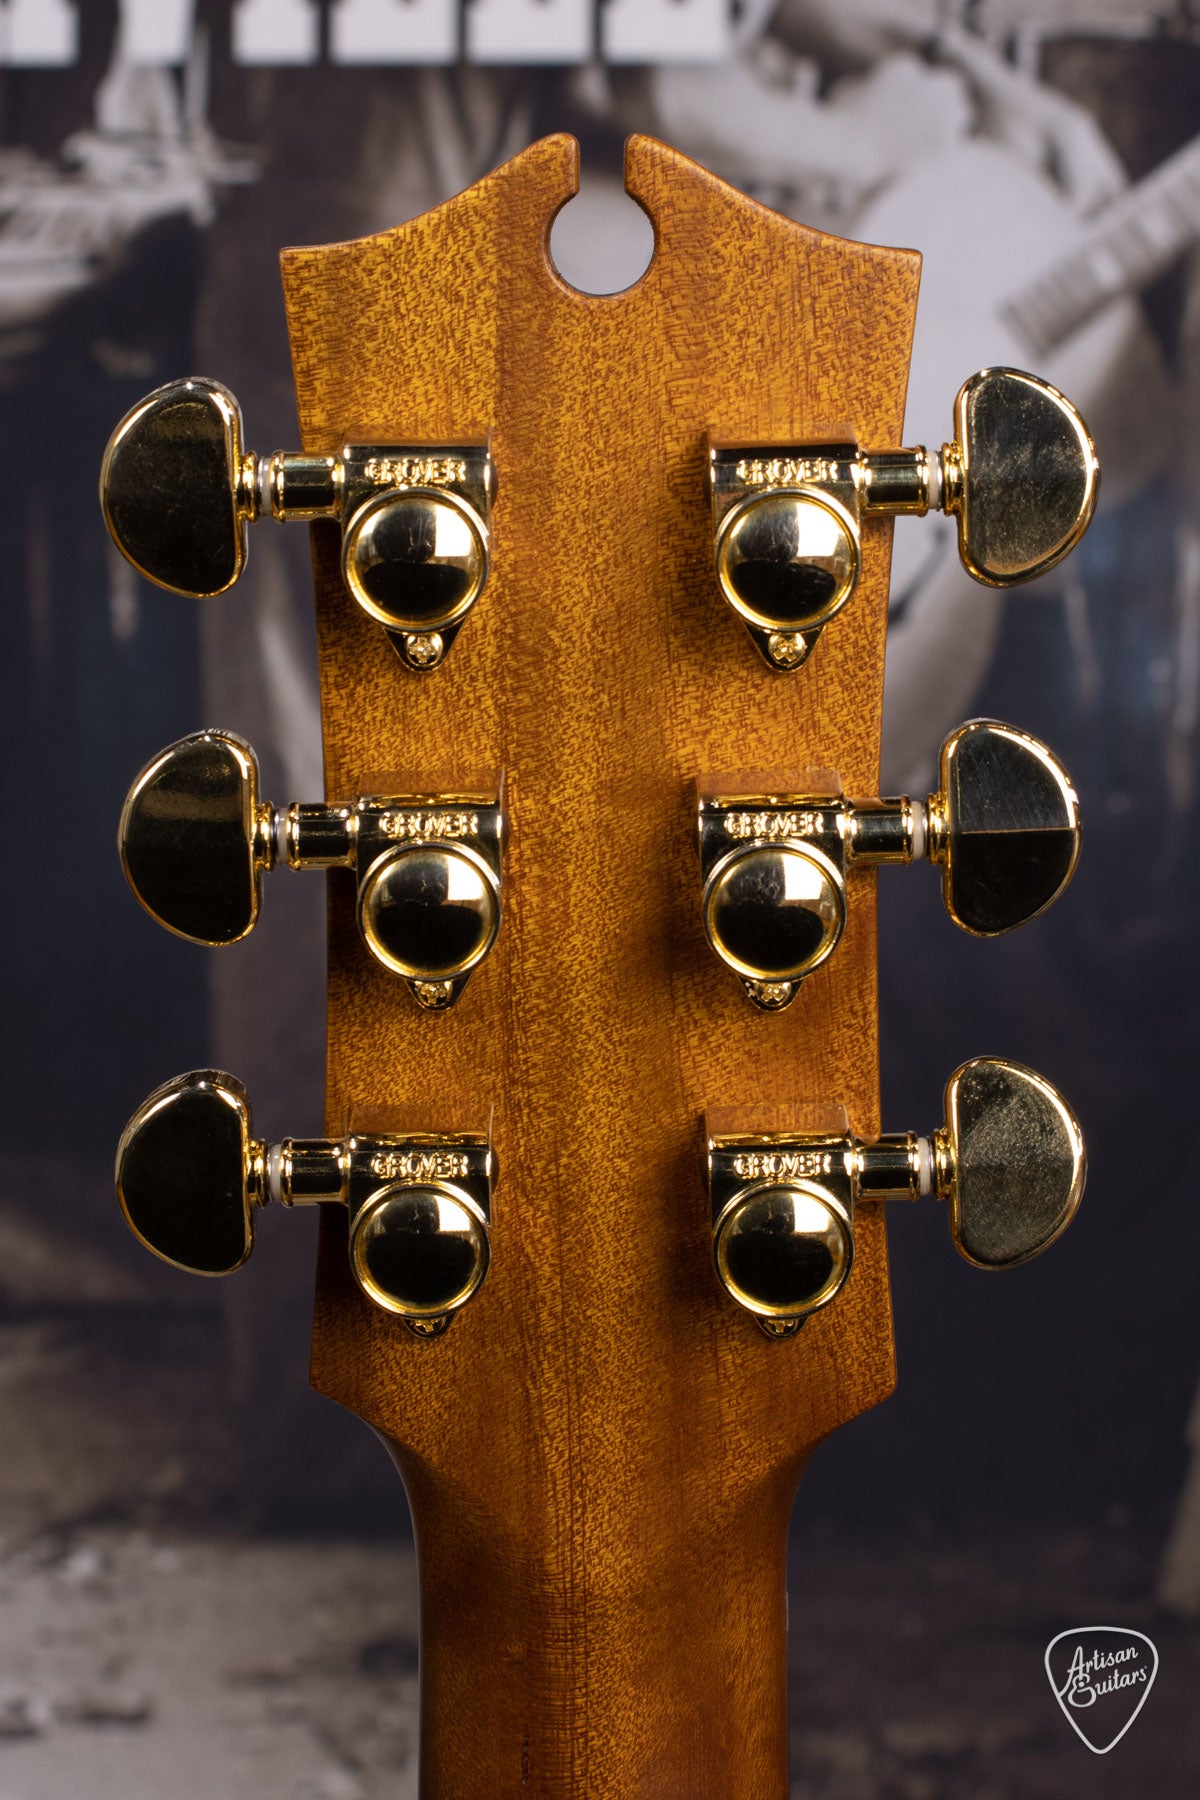 Maton Guitars EBG-808C Nashville Cutaway - 16399